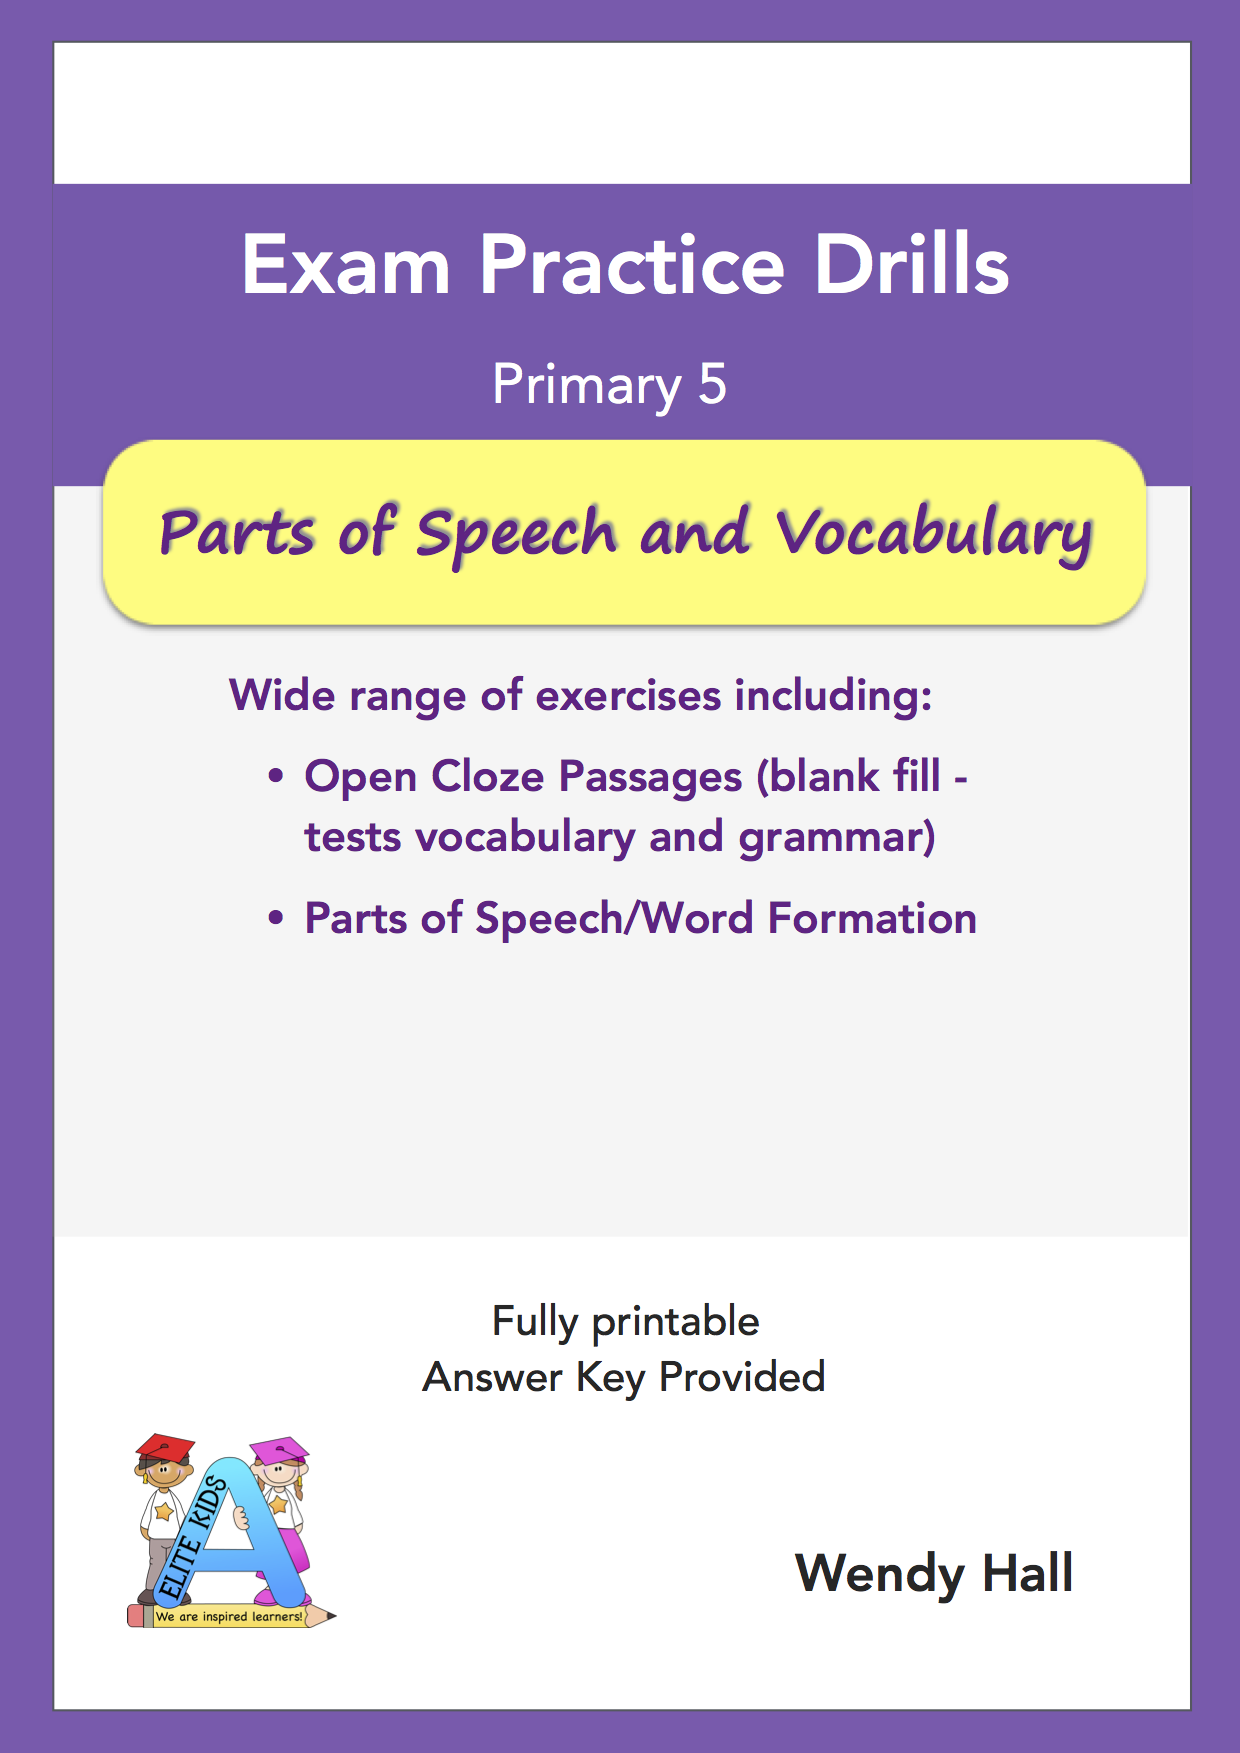 Elite Kids | Exam Practice Drills - Parts of speech and vocabulary - Primary 5